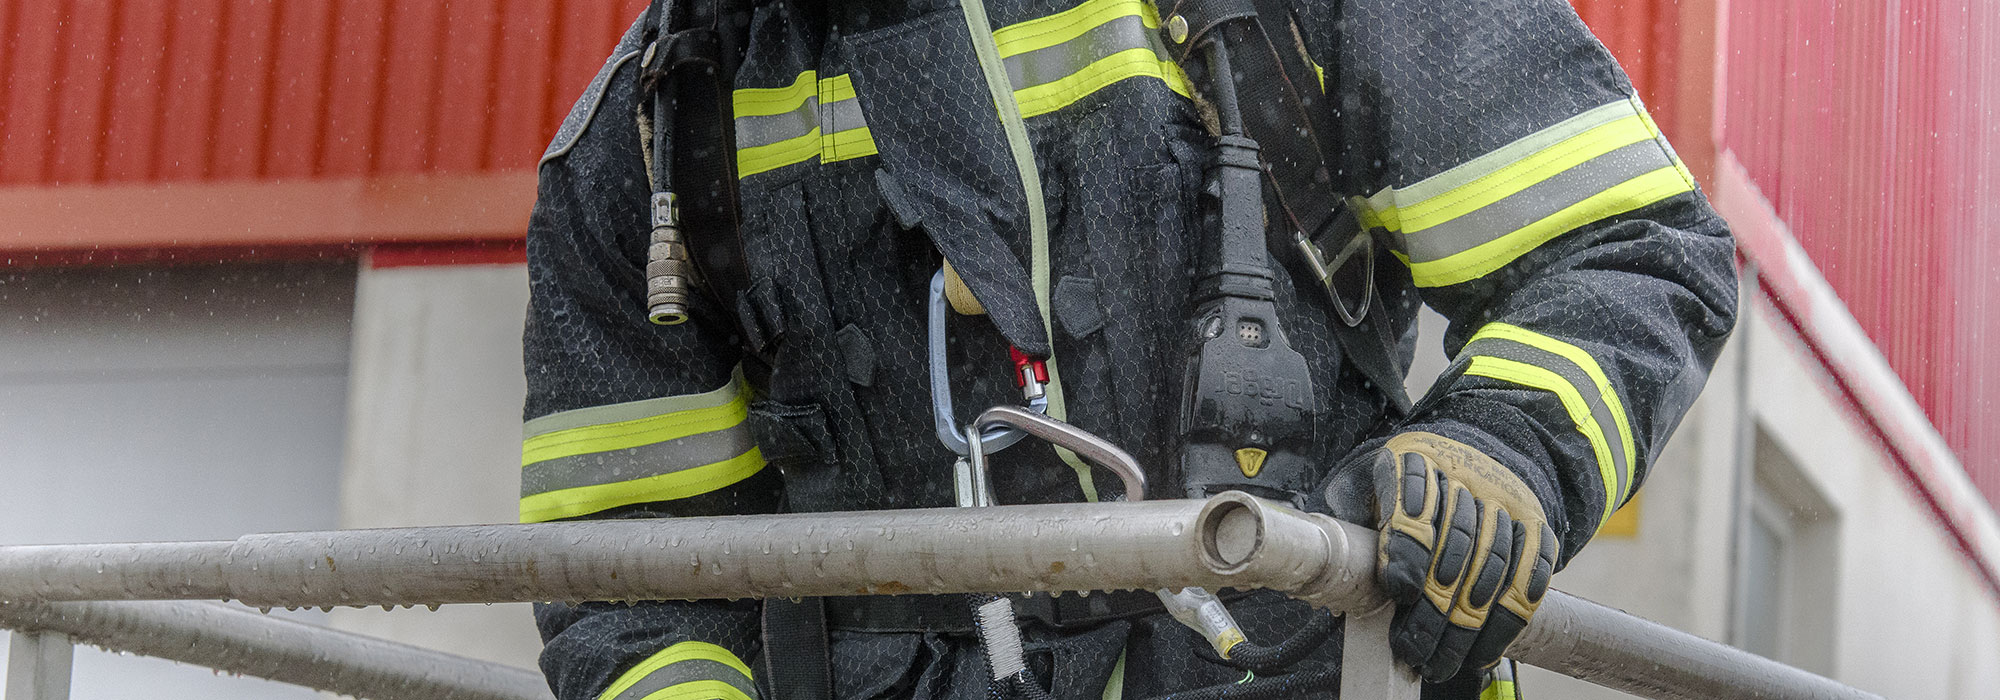 cupón Atrevimiento desaparecer Vestuario bomberos – ITURRI | Your safety matters